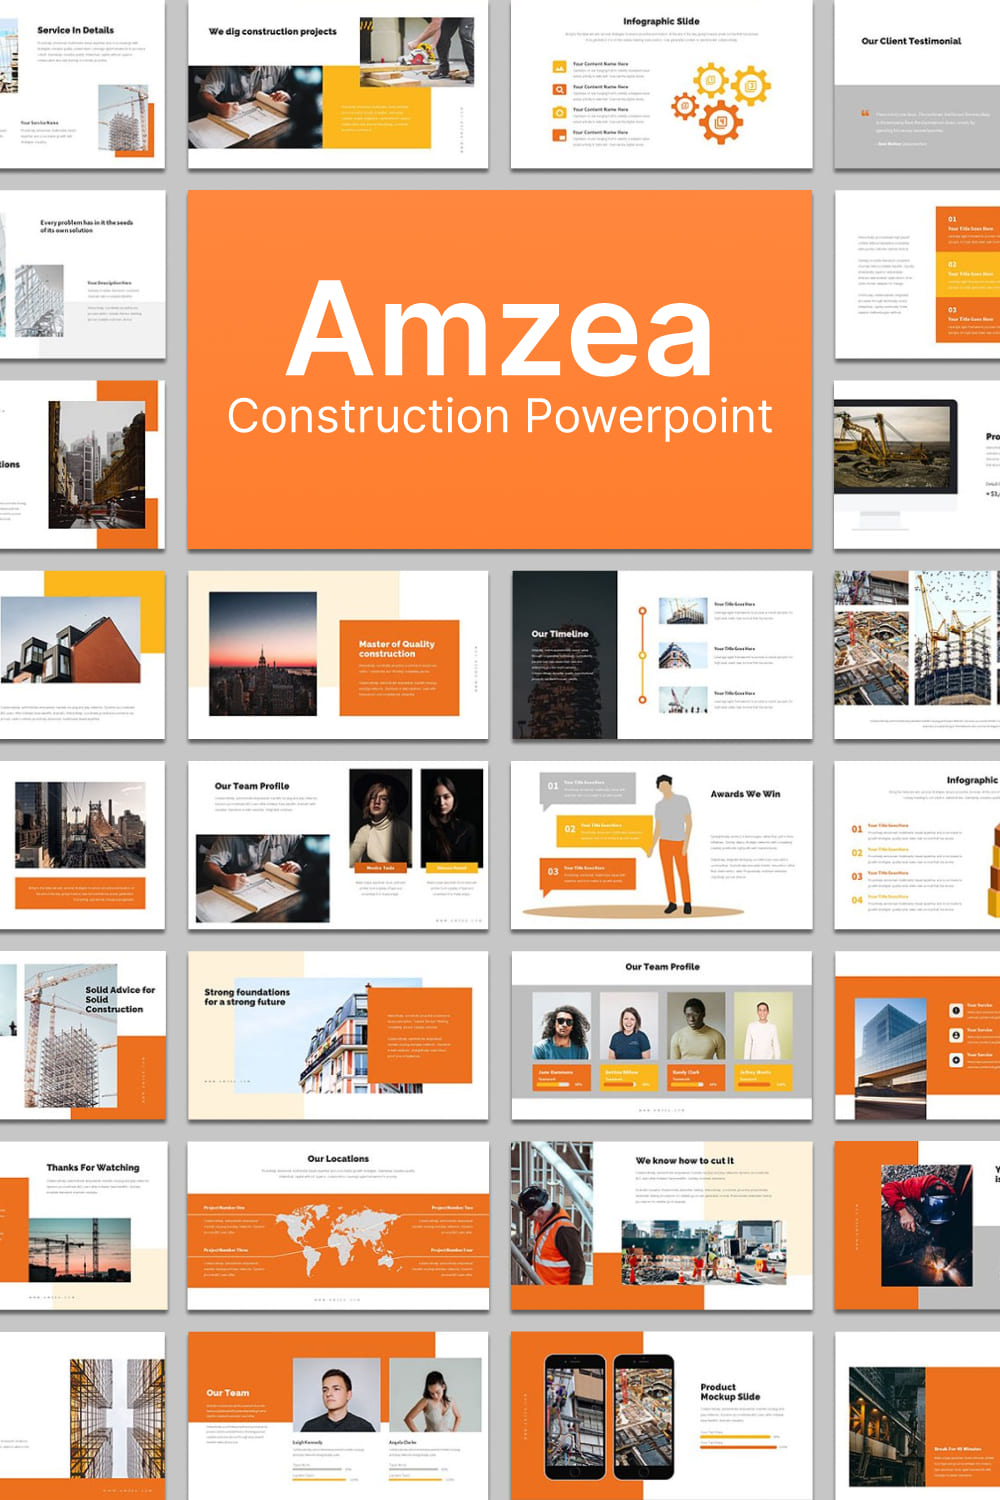 amzea construction powerpoint 03